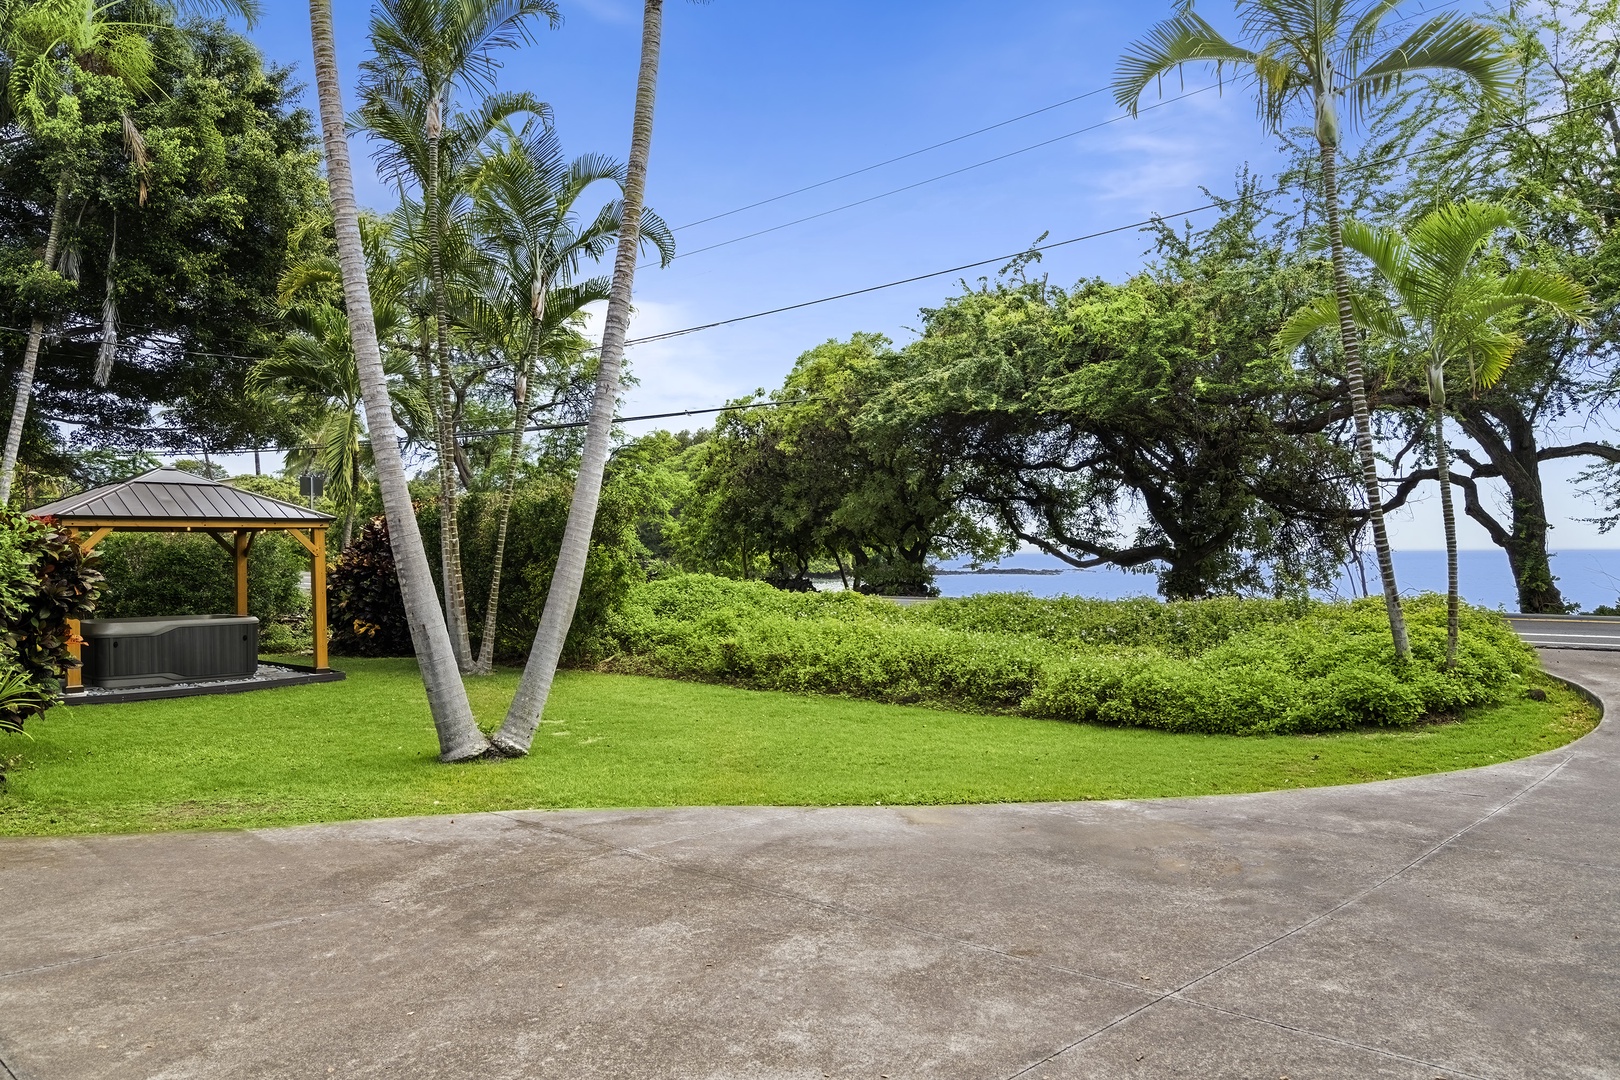 Kailua Kona Vacation Rentals, Lymans Bay Hale - Front Views